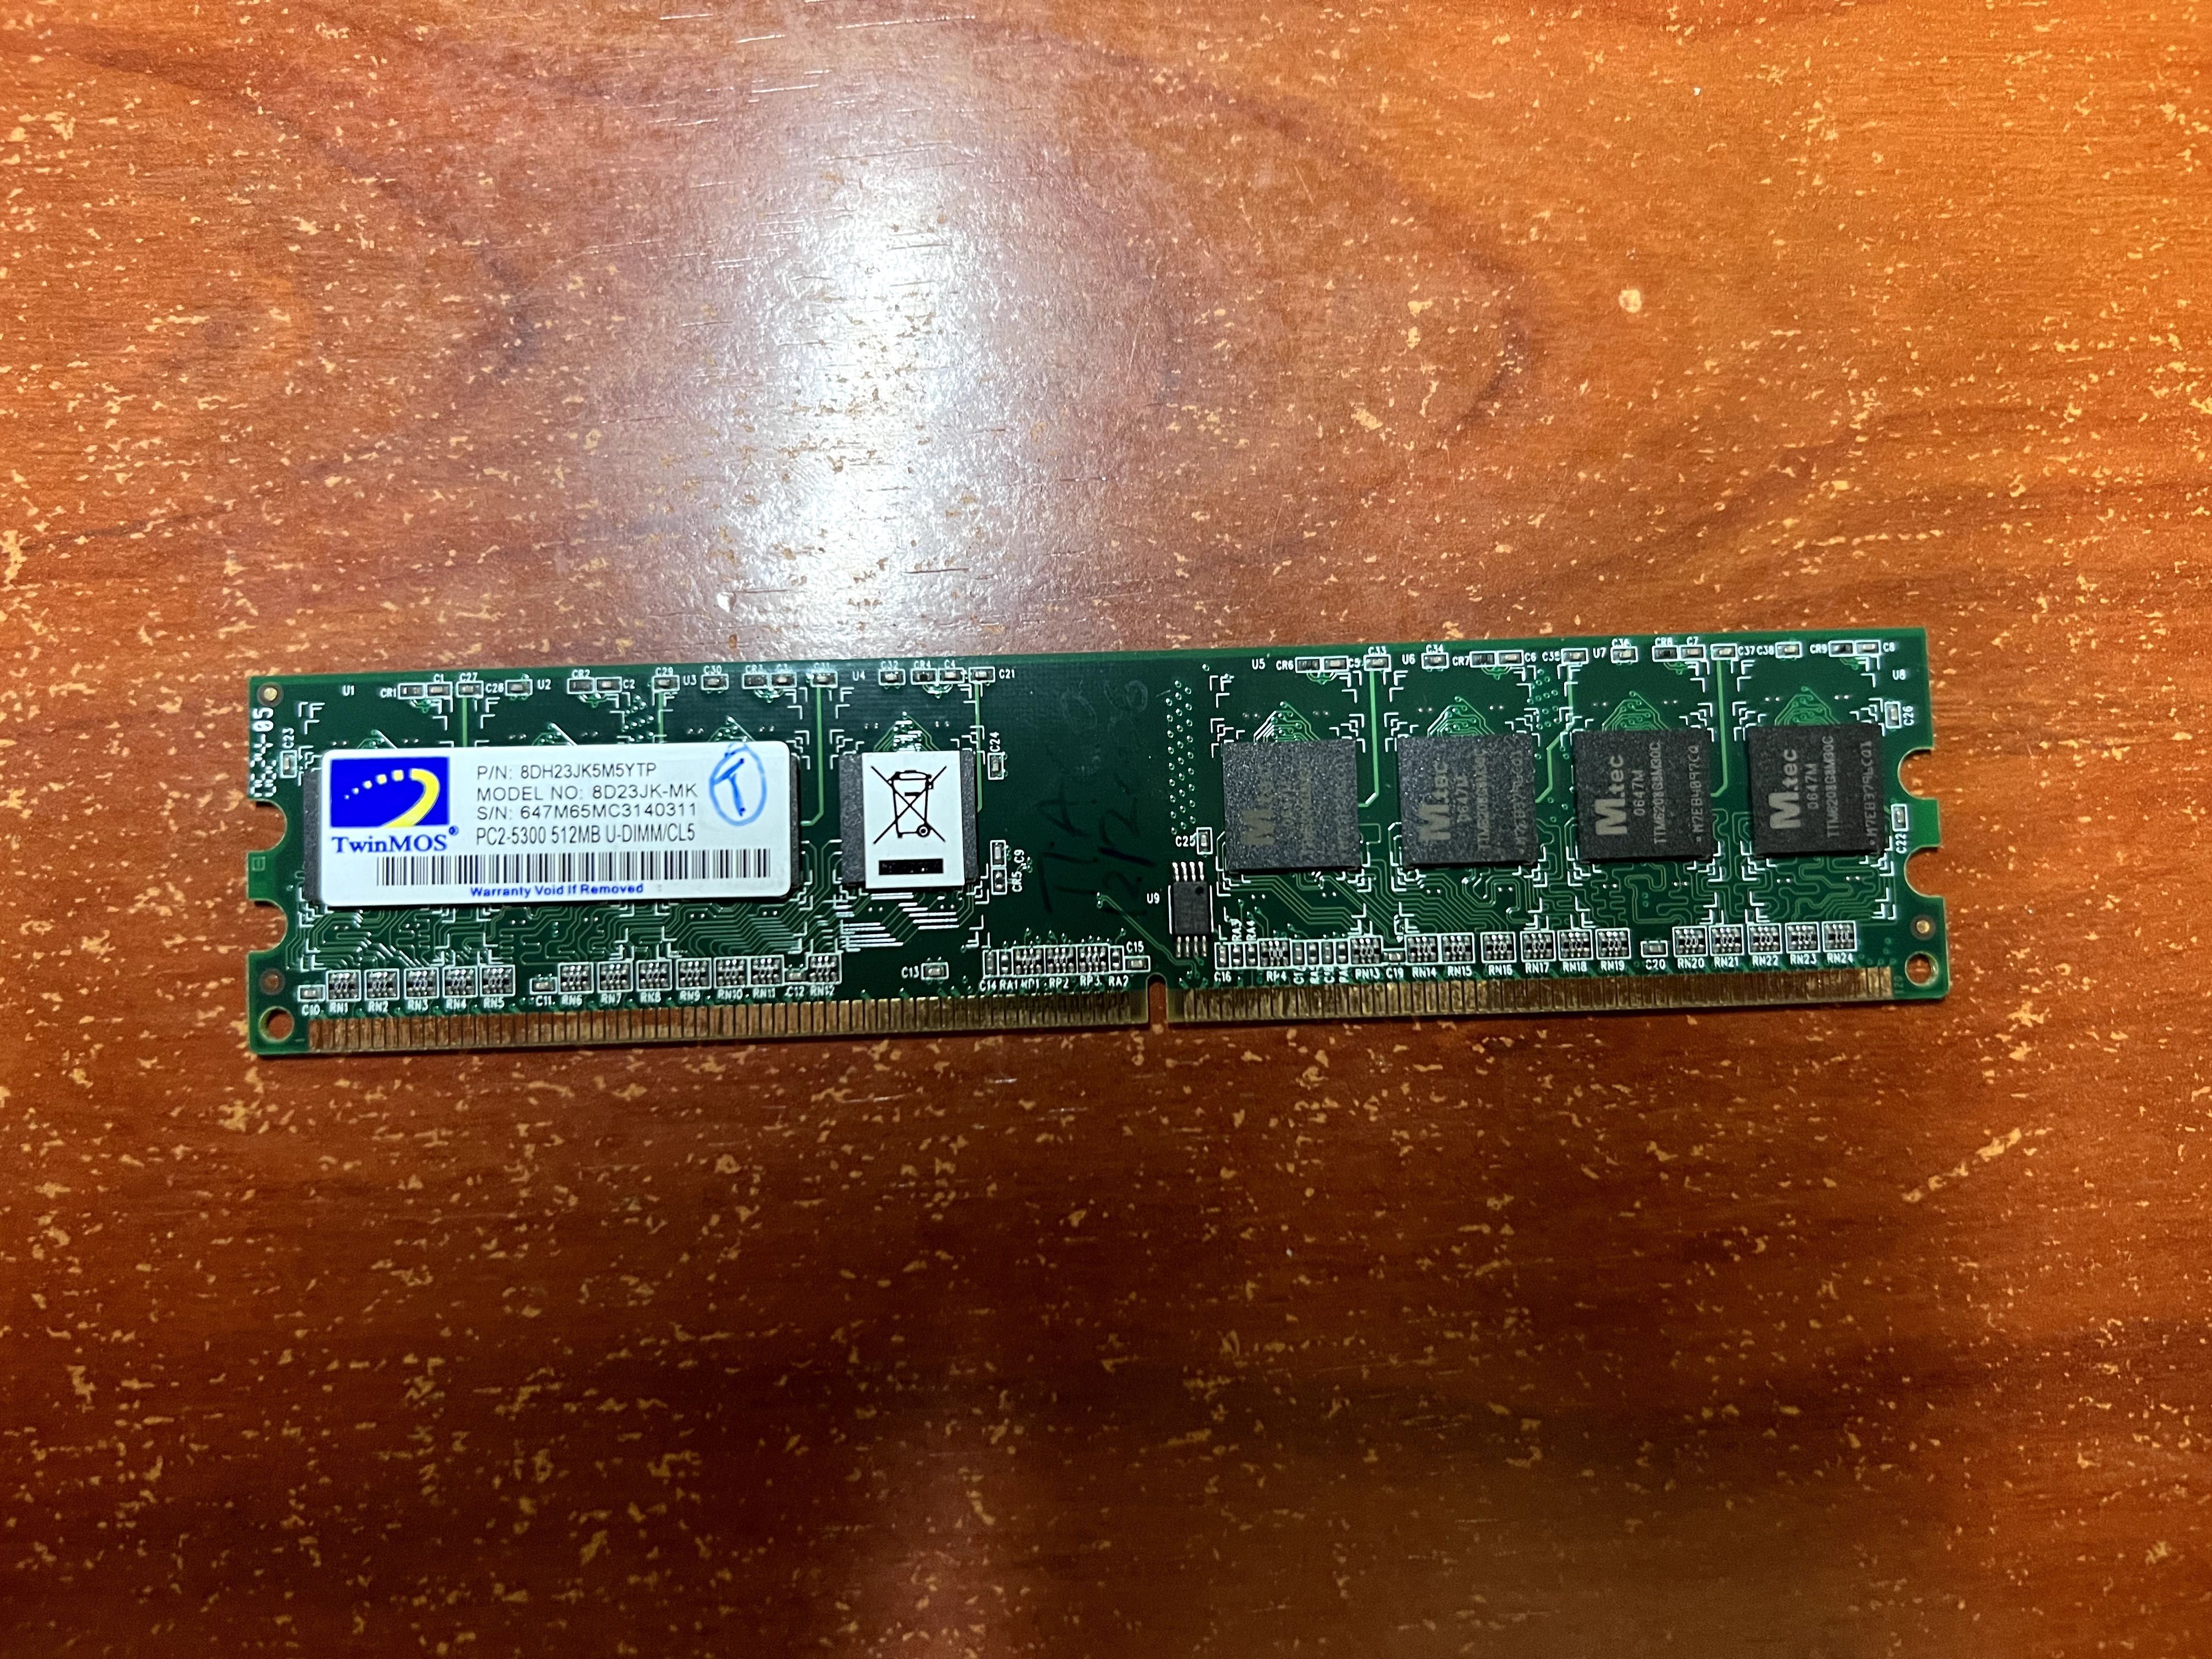 RAM DDR2 512MB TwinMOS 8D23JK-MK 667MHz